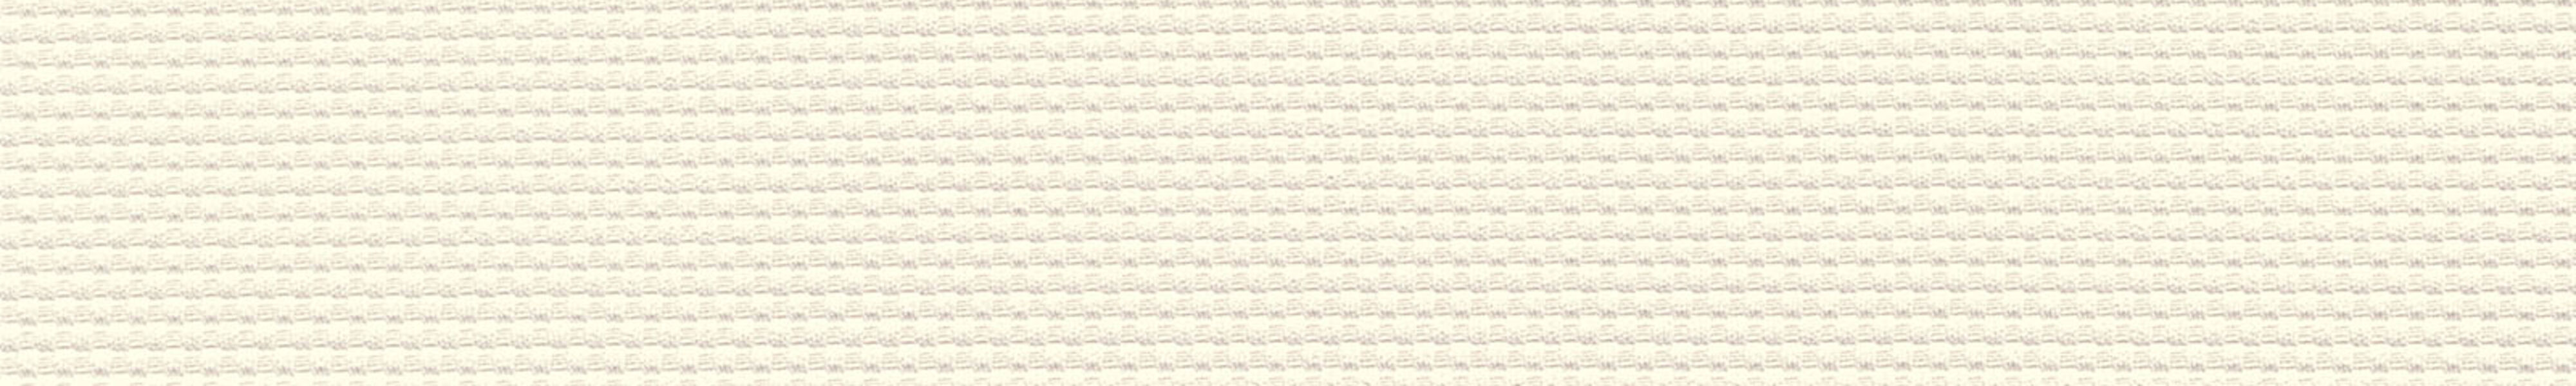 skai® cool colors Venezia  white